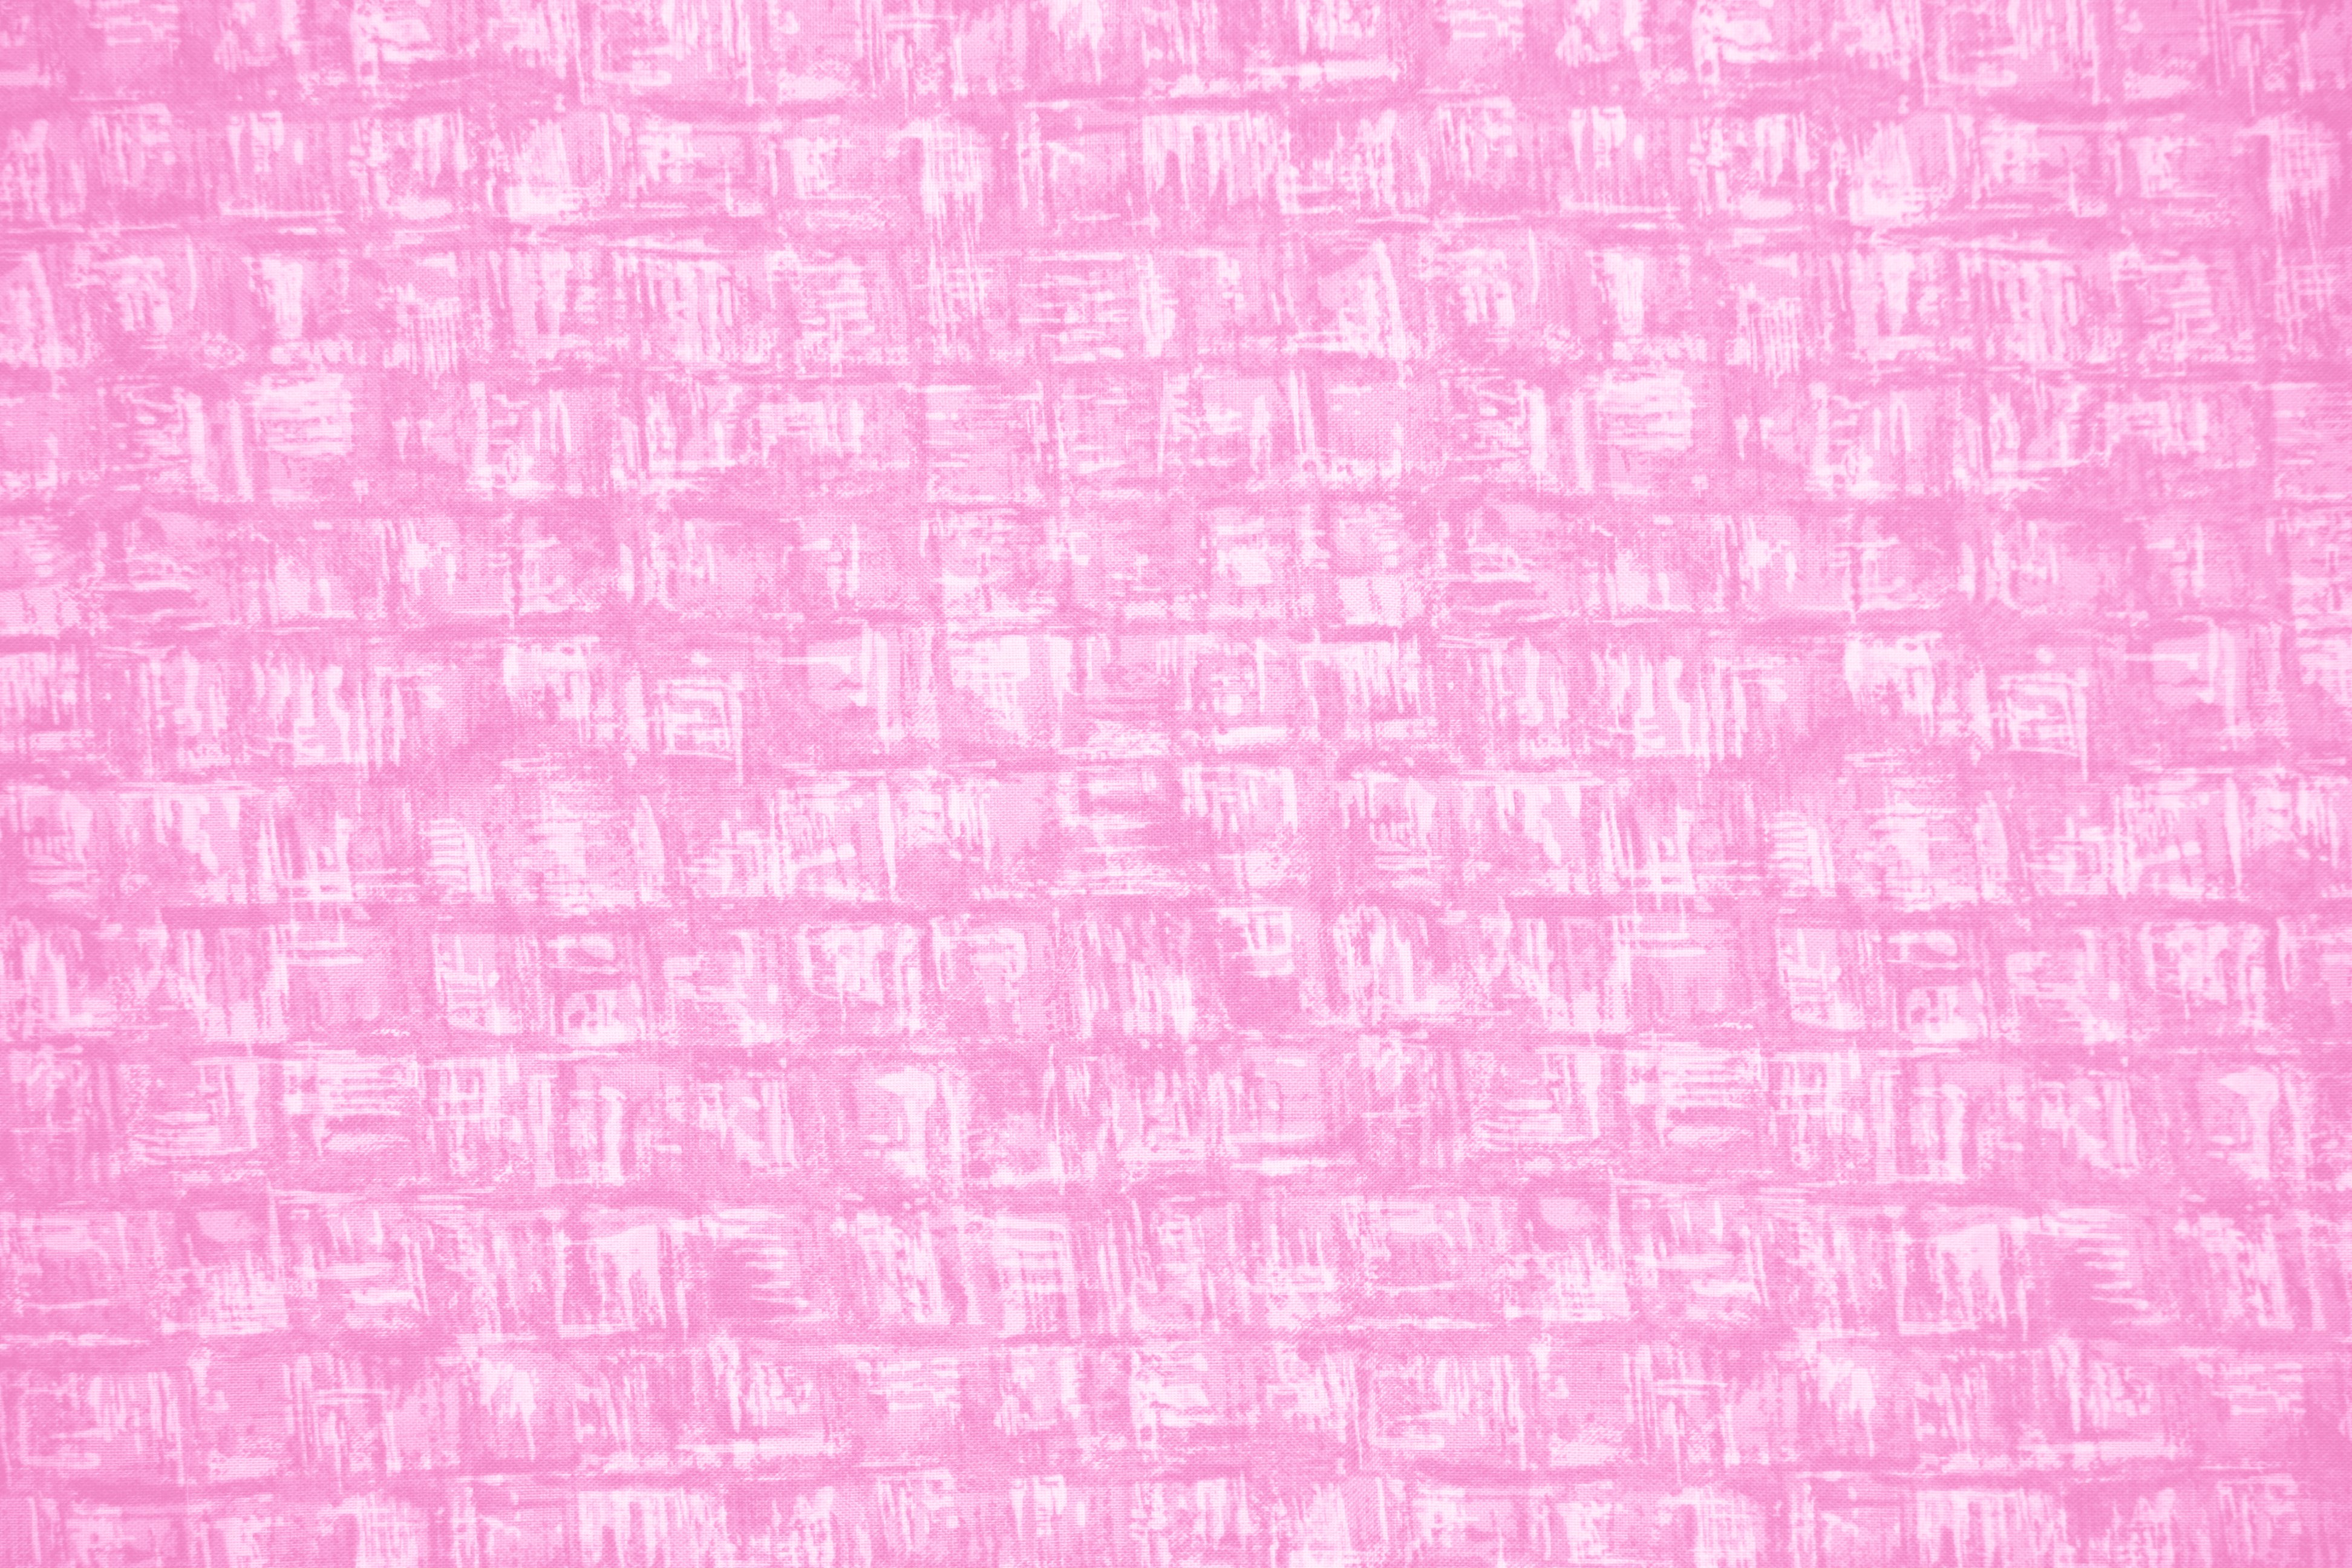 Dark Pink Fabric Texture